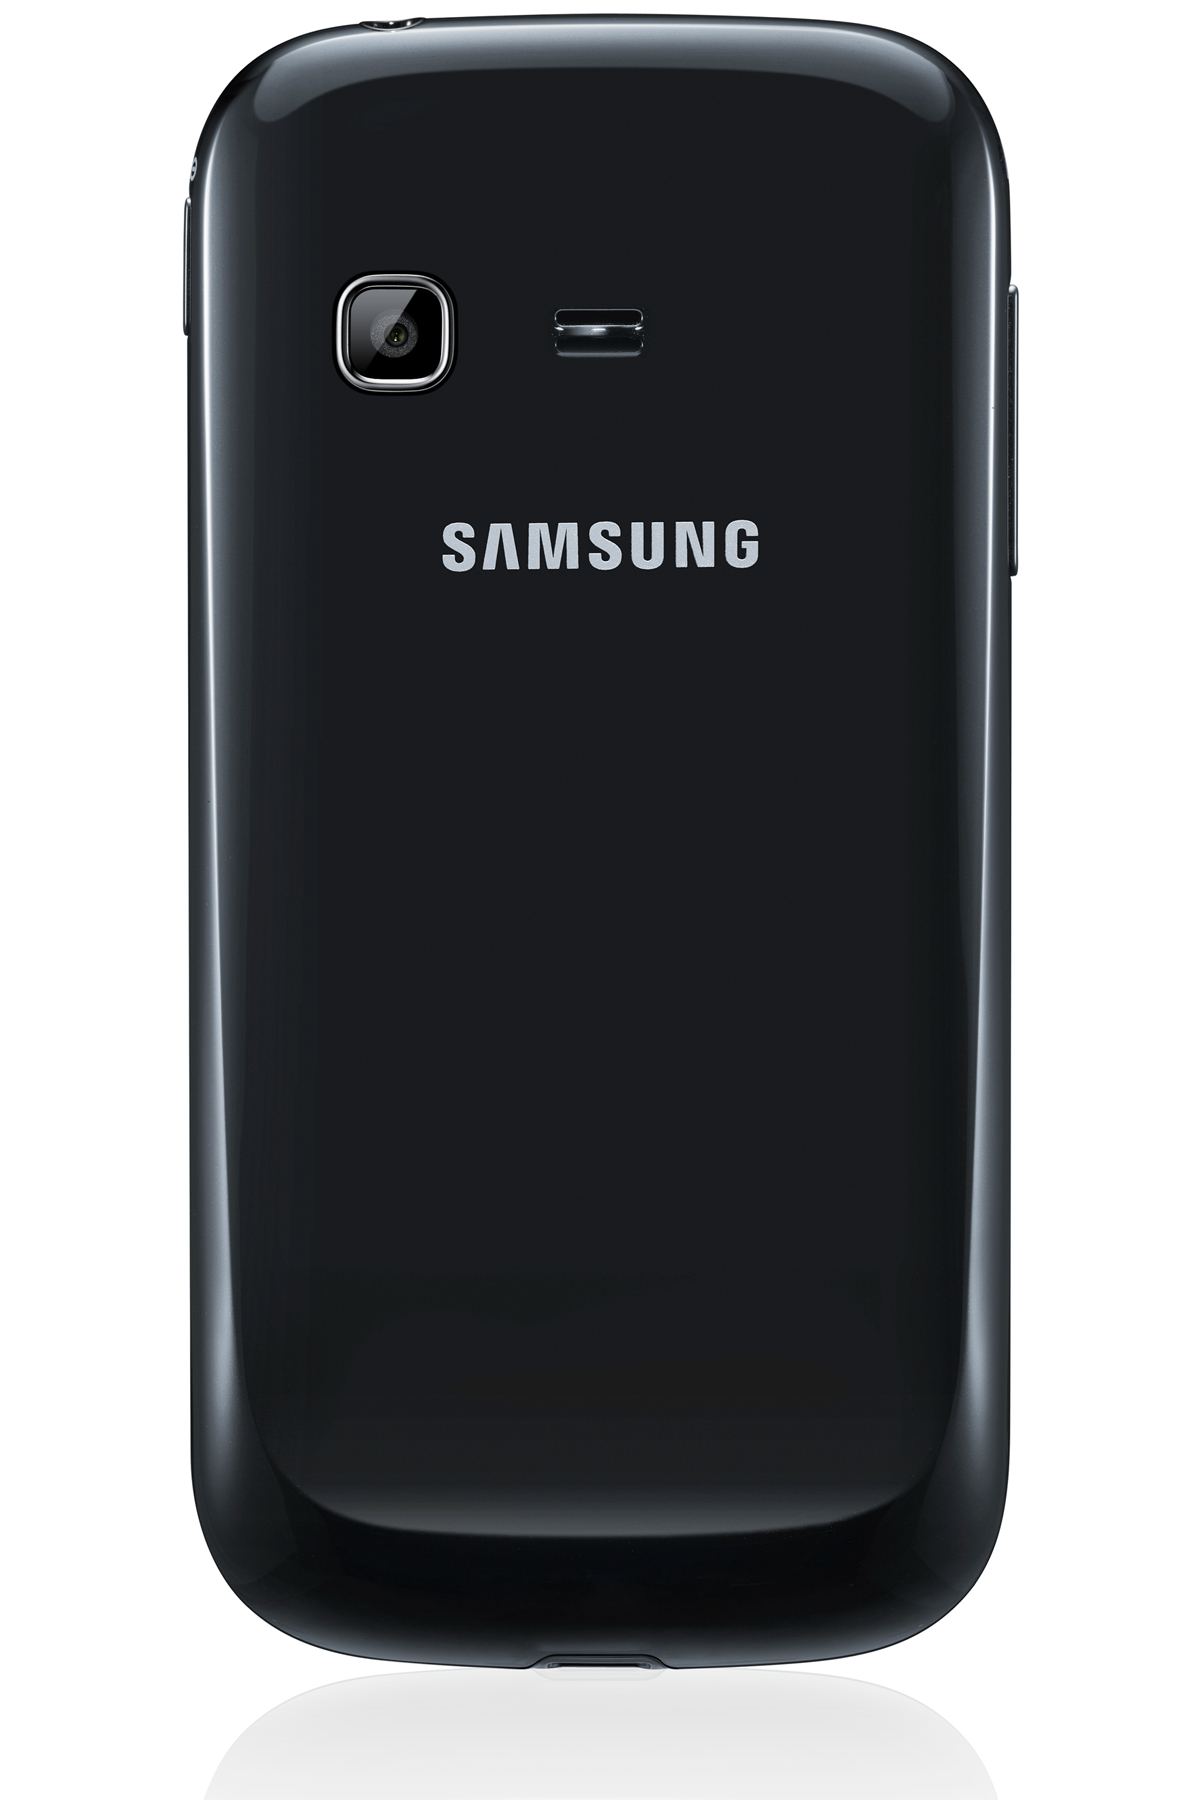 Samsung Galaxy Chat Gt B5330 Camera